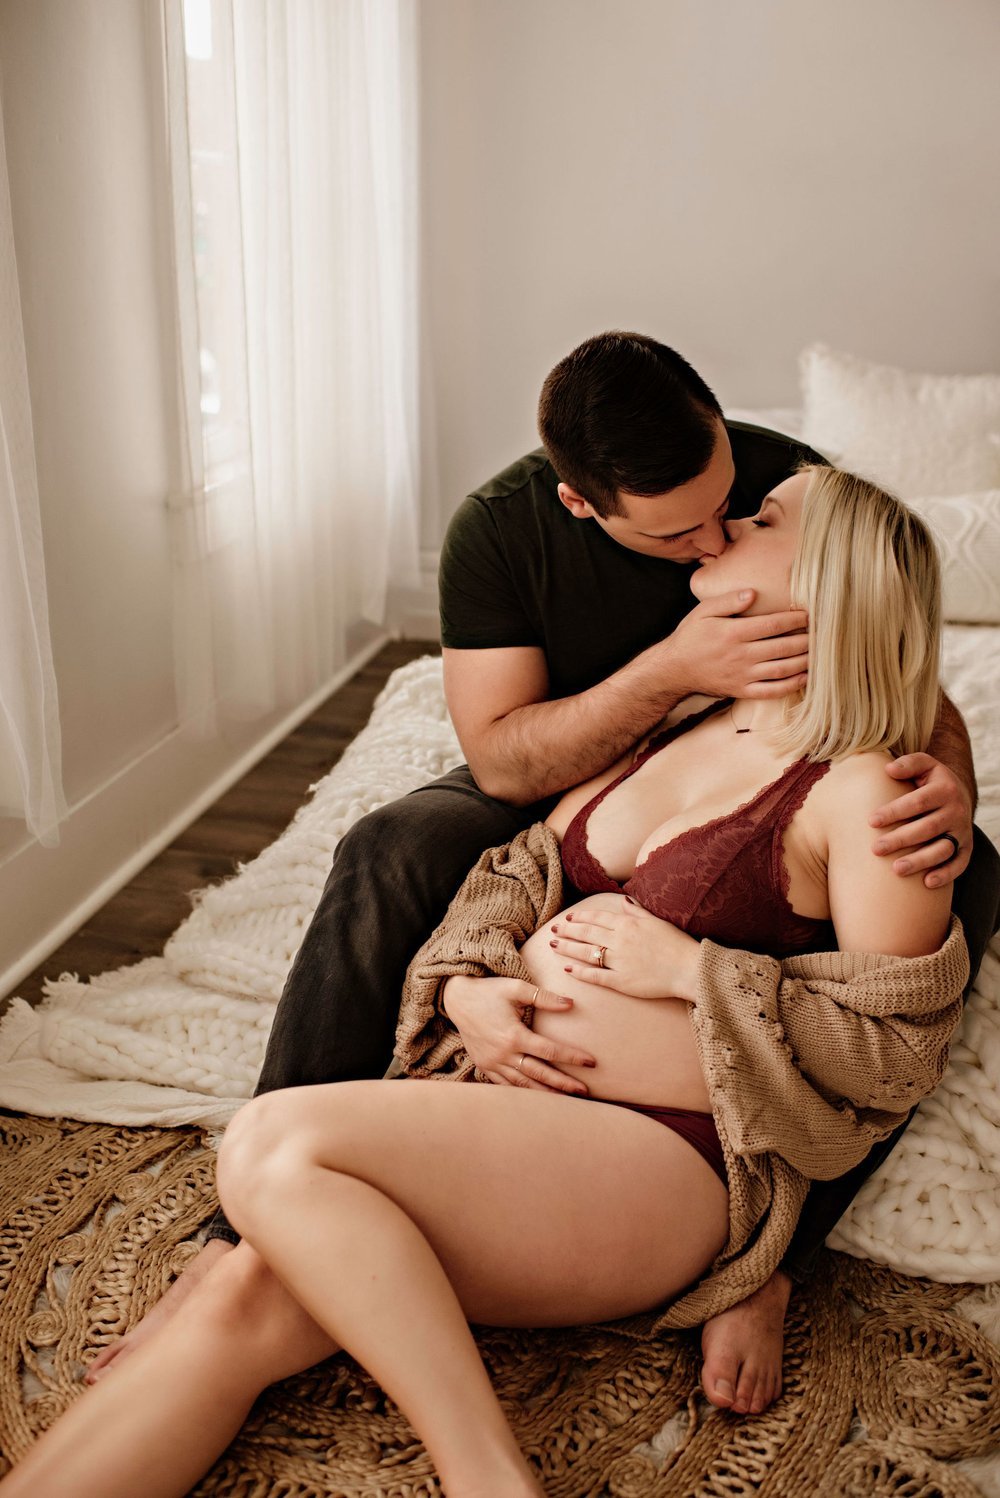 cleveland-ohio-boudoir-maternity-couples-photo-session-lauren-grayson15.jpeg